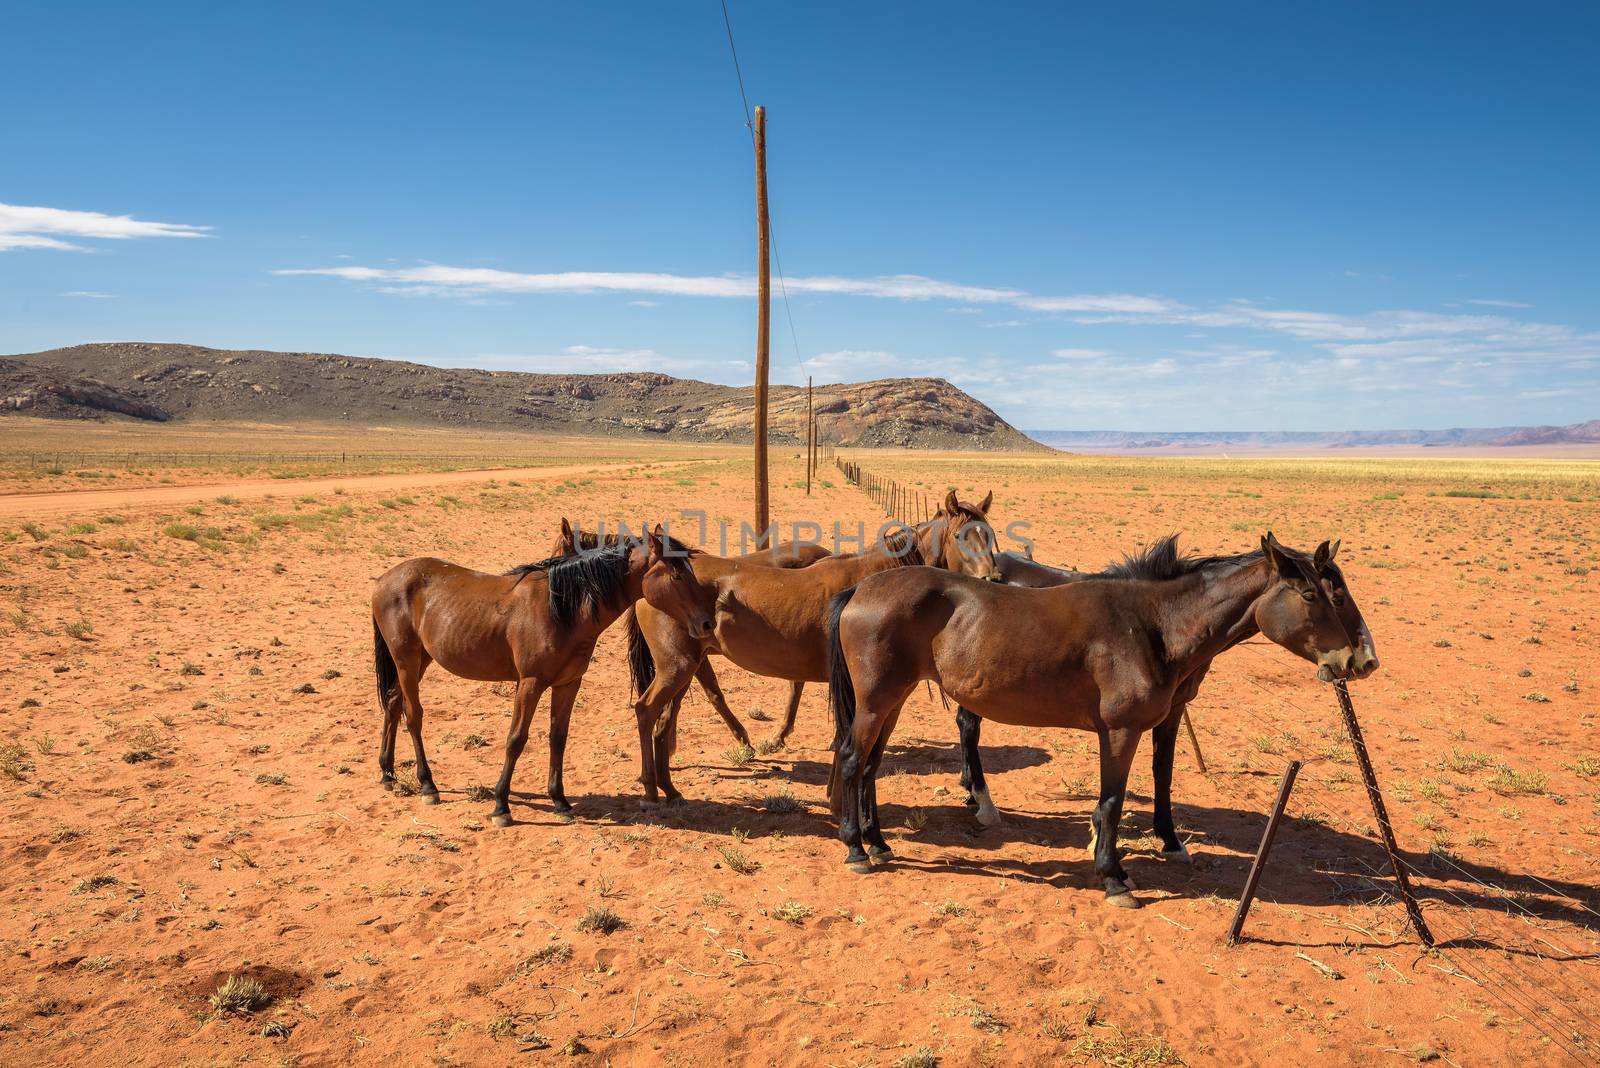 Wild horse of the Namib desert near Aus, south Namibia by nickfox